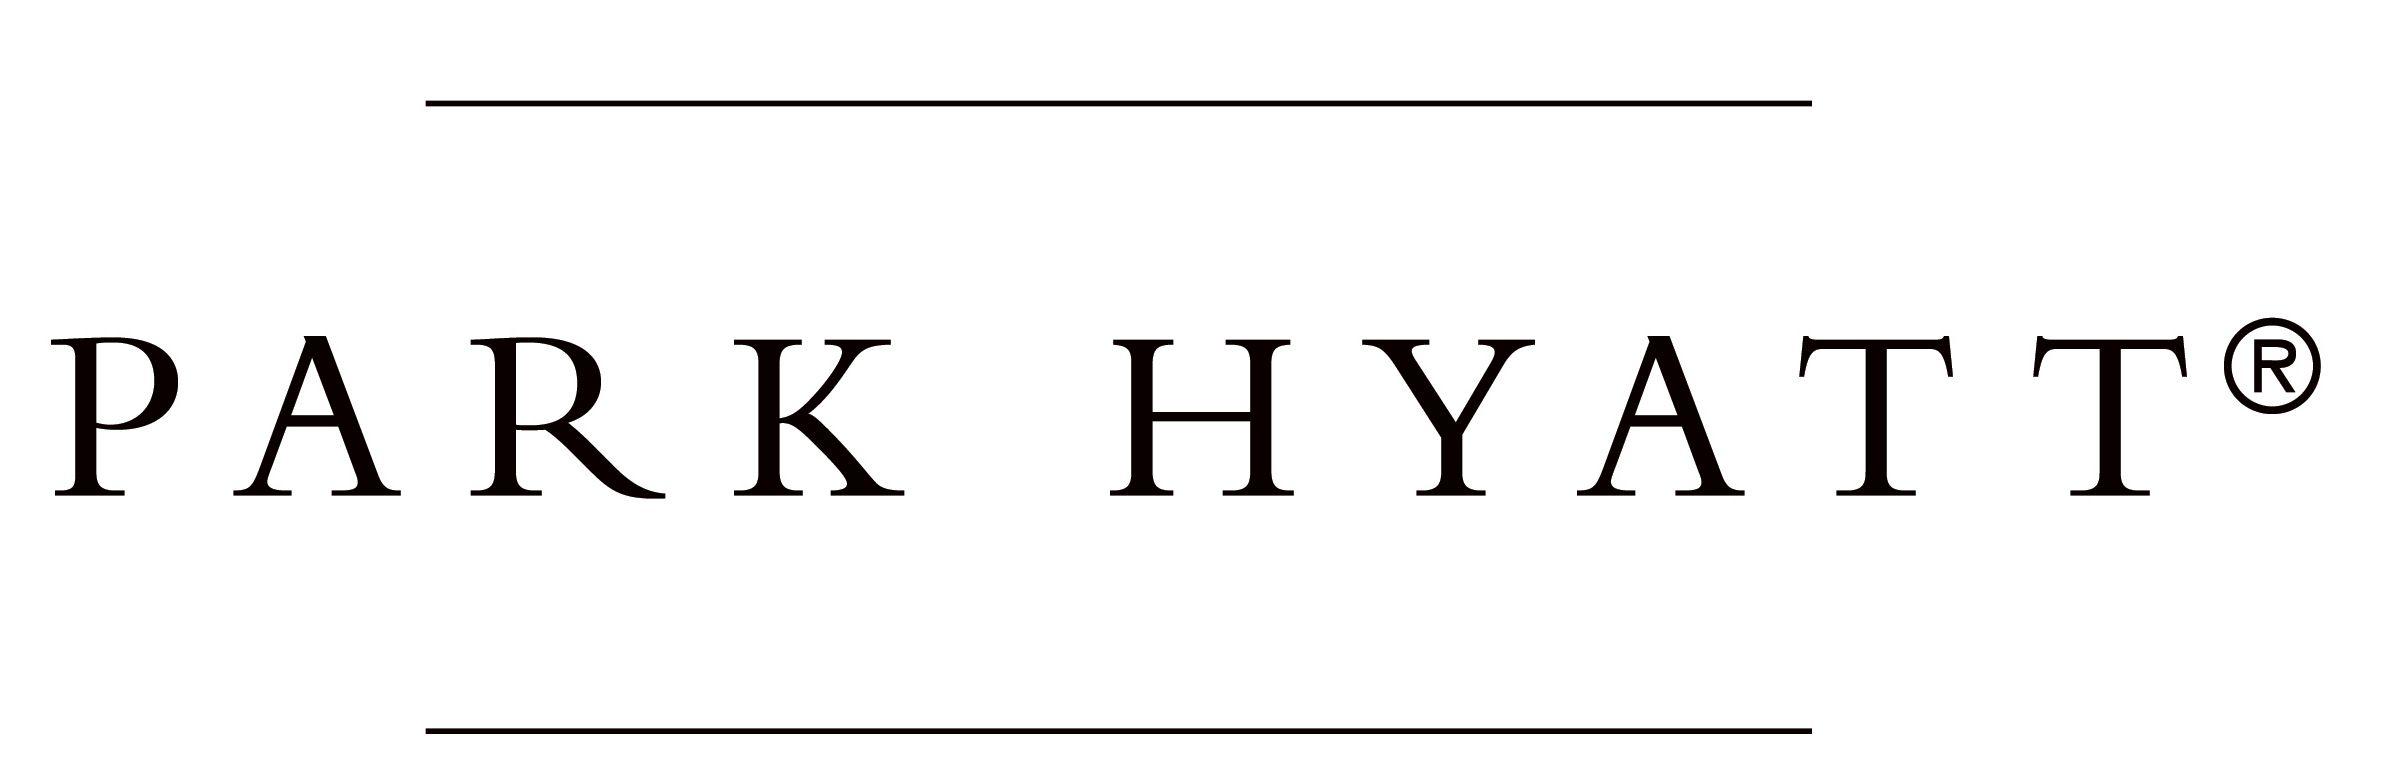 Hyatt Hotel Logo - MNC Land and Hyatt to Bring First Park Hyatt Hotel to Indonesia